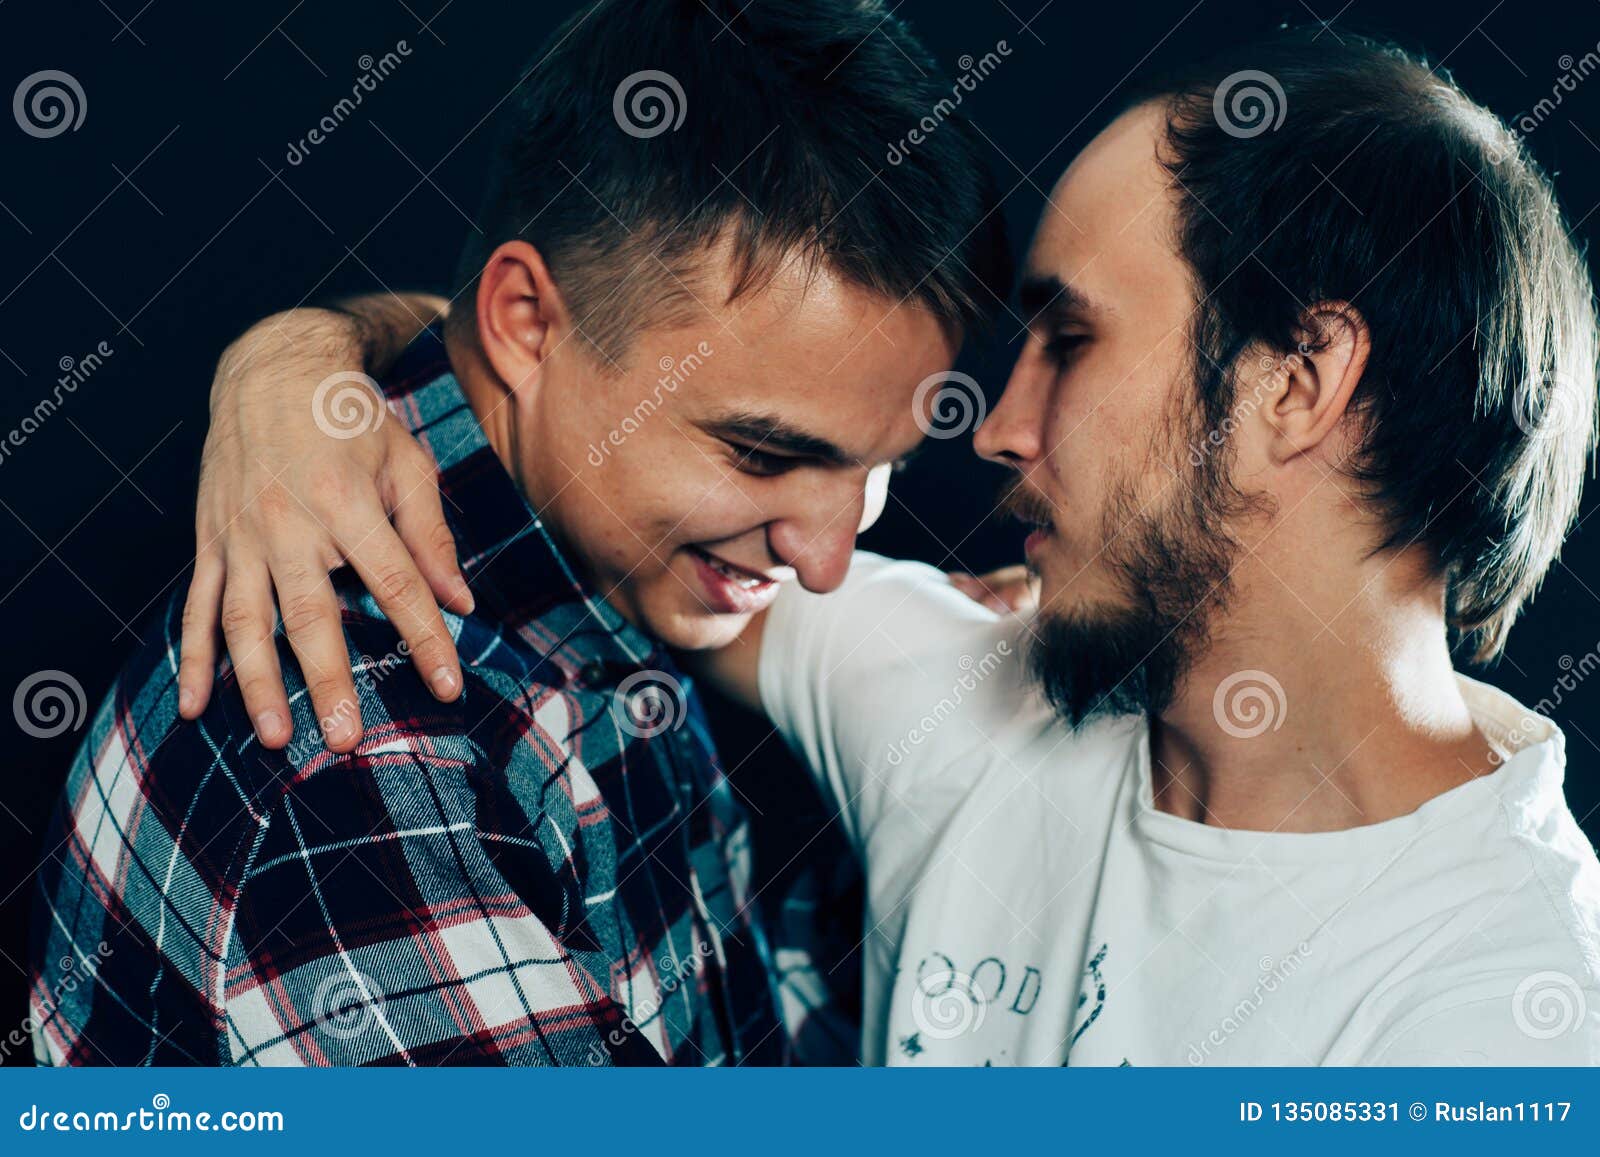 Two guys hugging